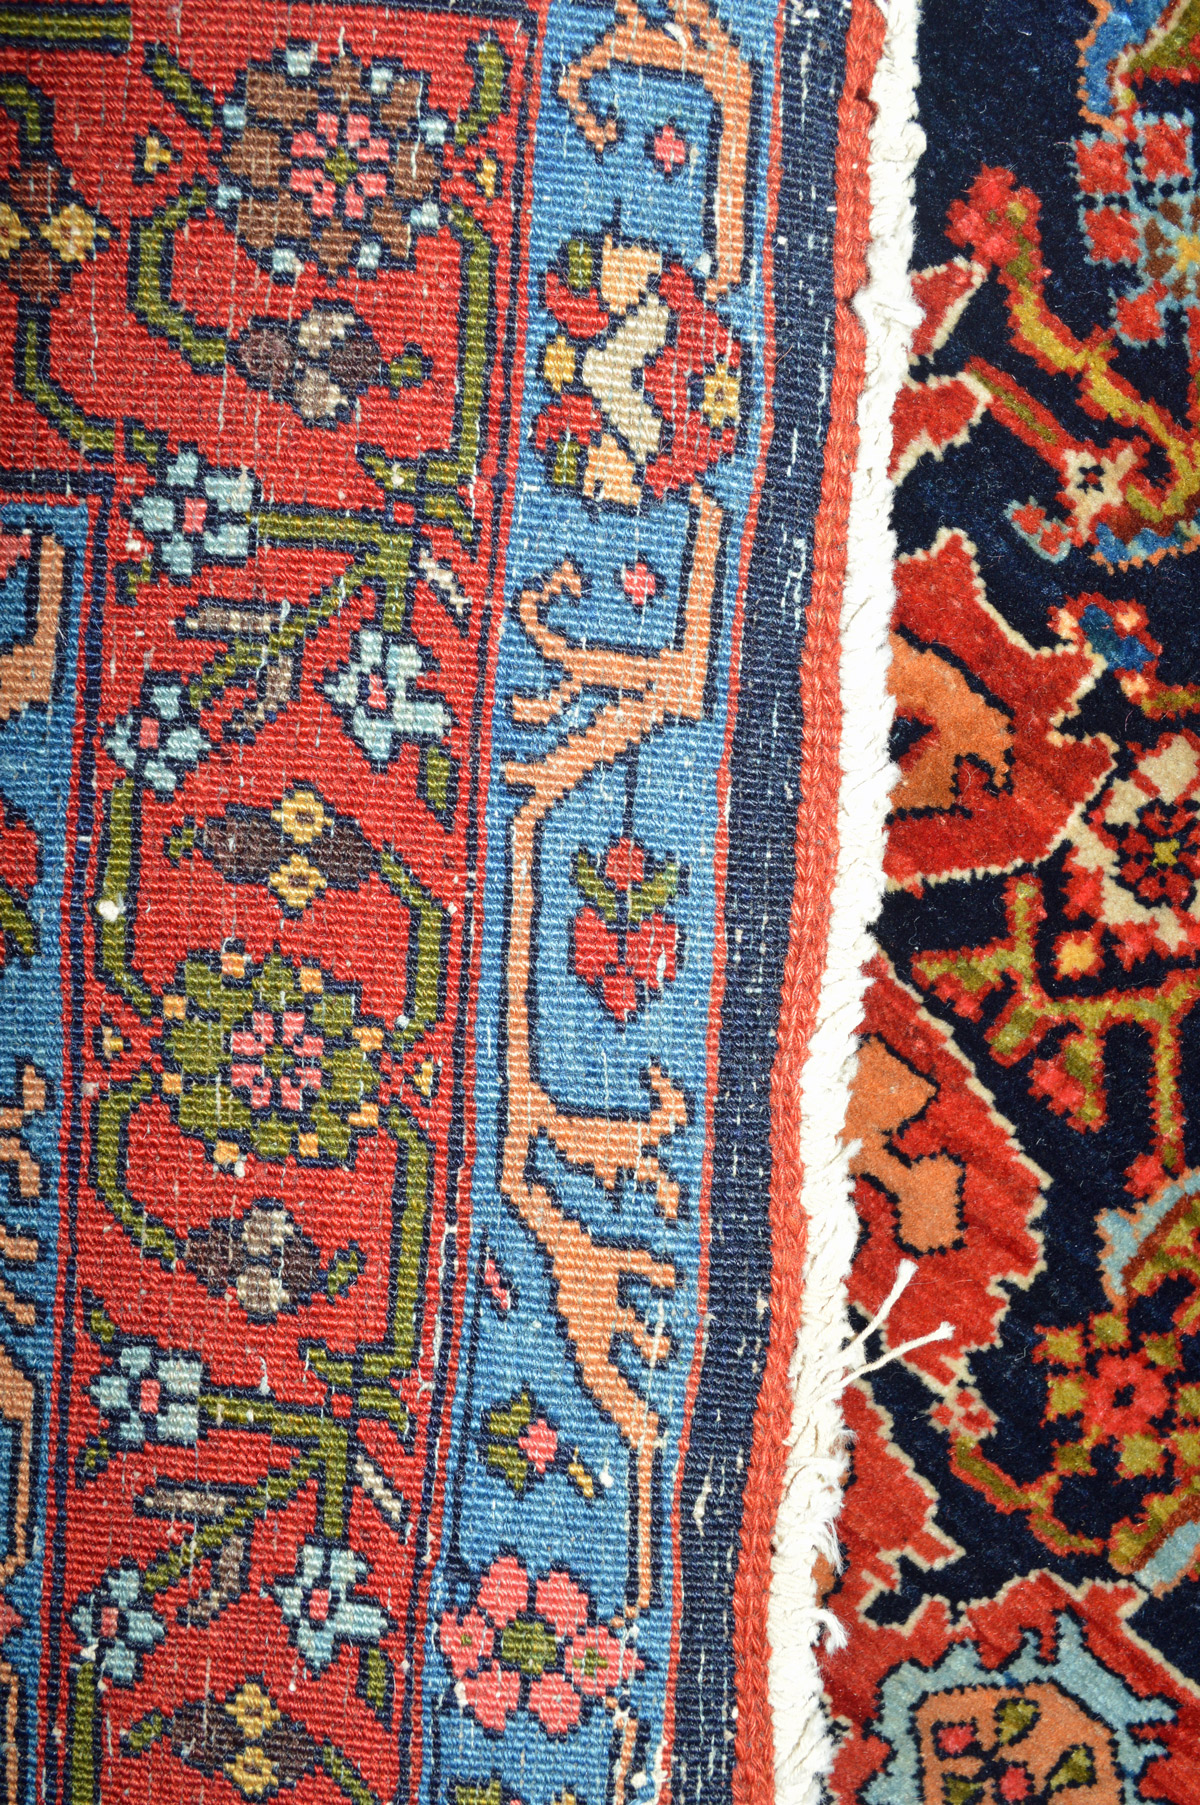 Weave detail of a densely woven antique Persian Bidjar rug - Douglas Stock Gallery, antique Persian rugs Boston,MA area, antique Persian rugs New England, antique Persian rugs New York